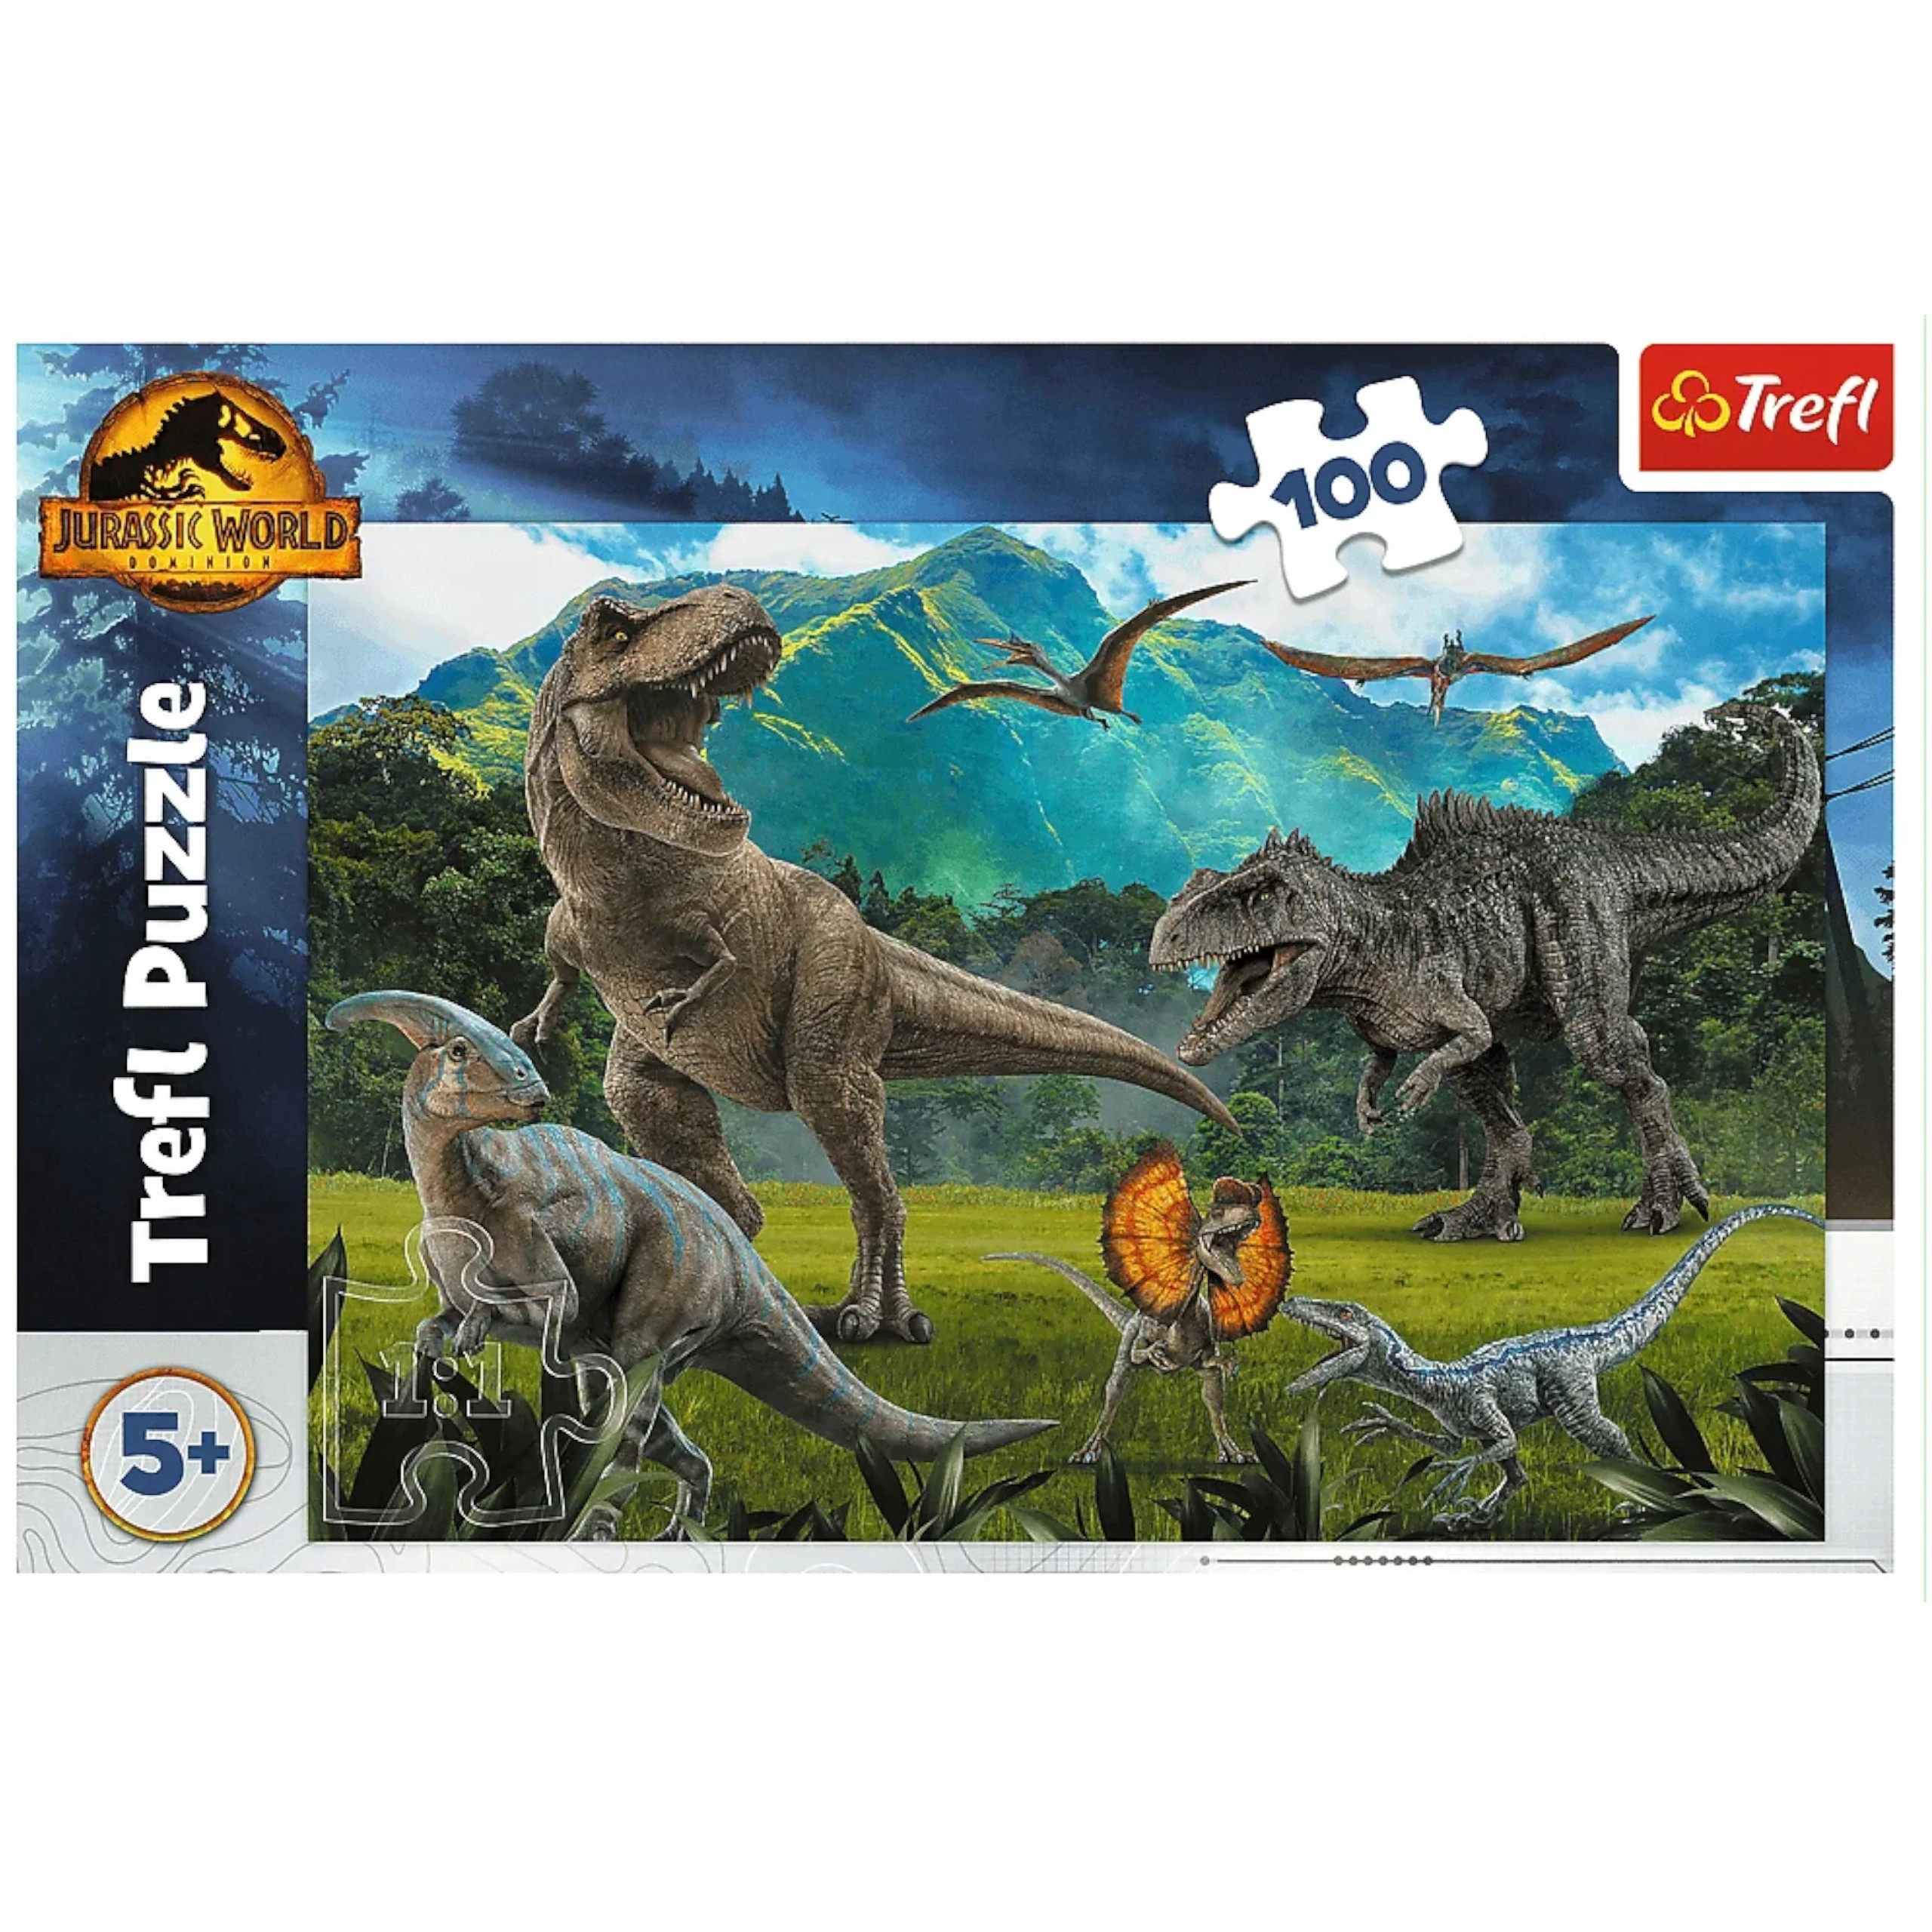 Puzzle Trefl dinozaury 100 el. Park jurajski 16441 Kod producenta 16441